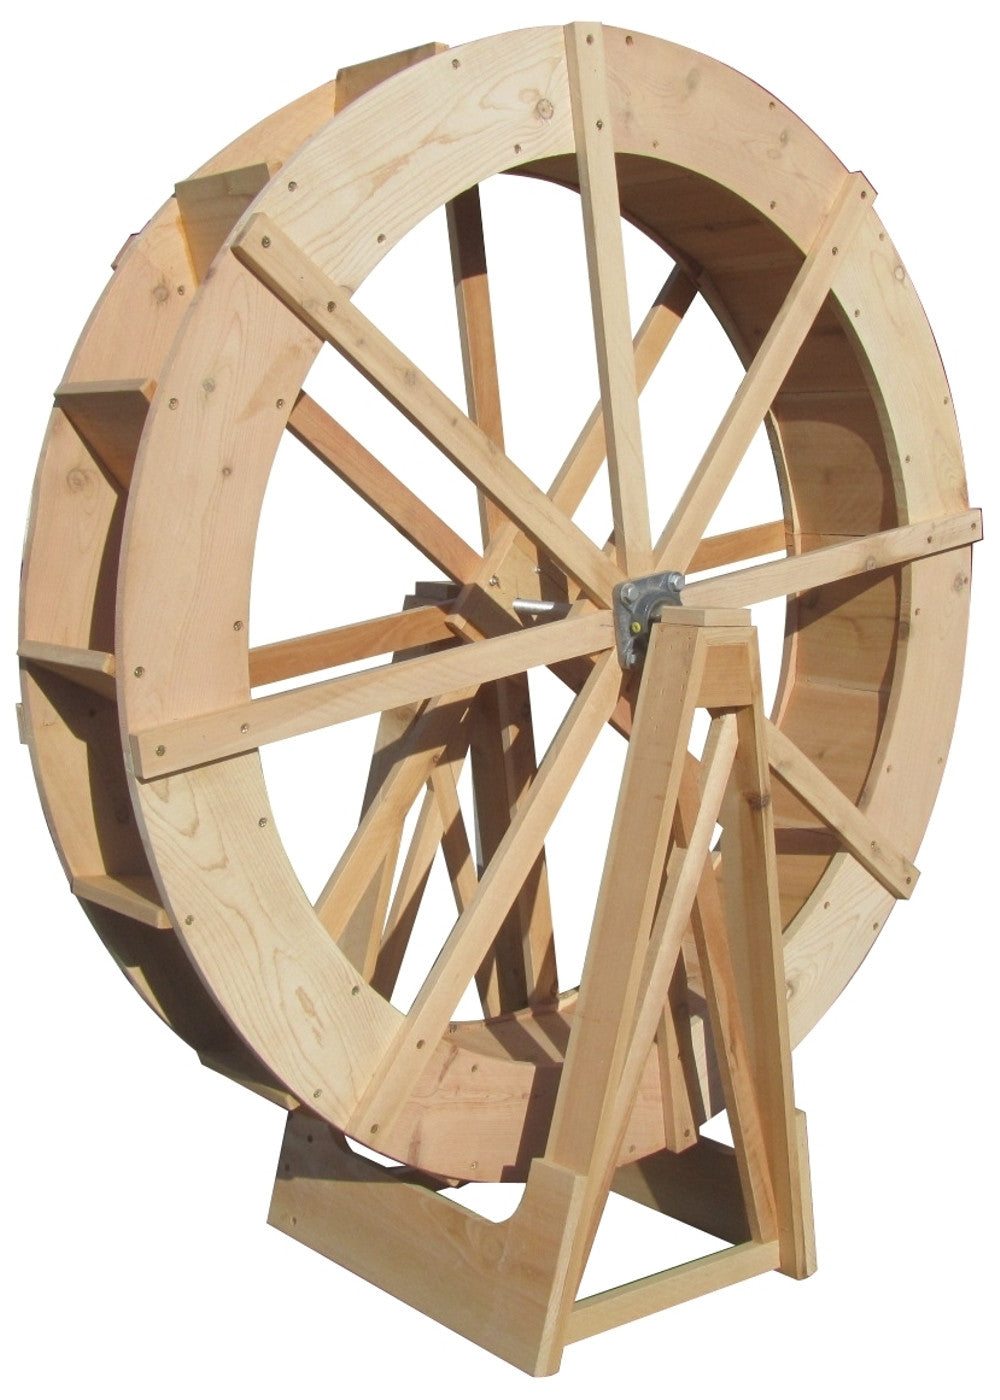 SamsGazebos Wood Water Wheel with Stand, 4-foot, Natural - SamsGazebos Made to Order